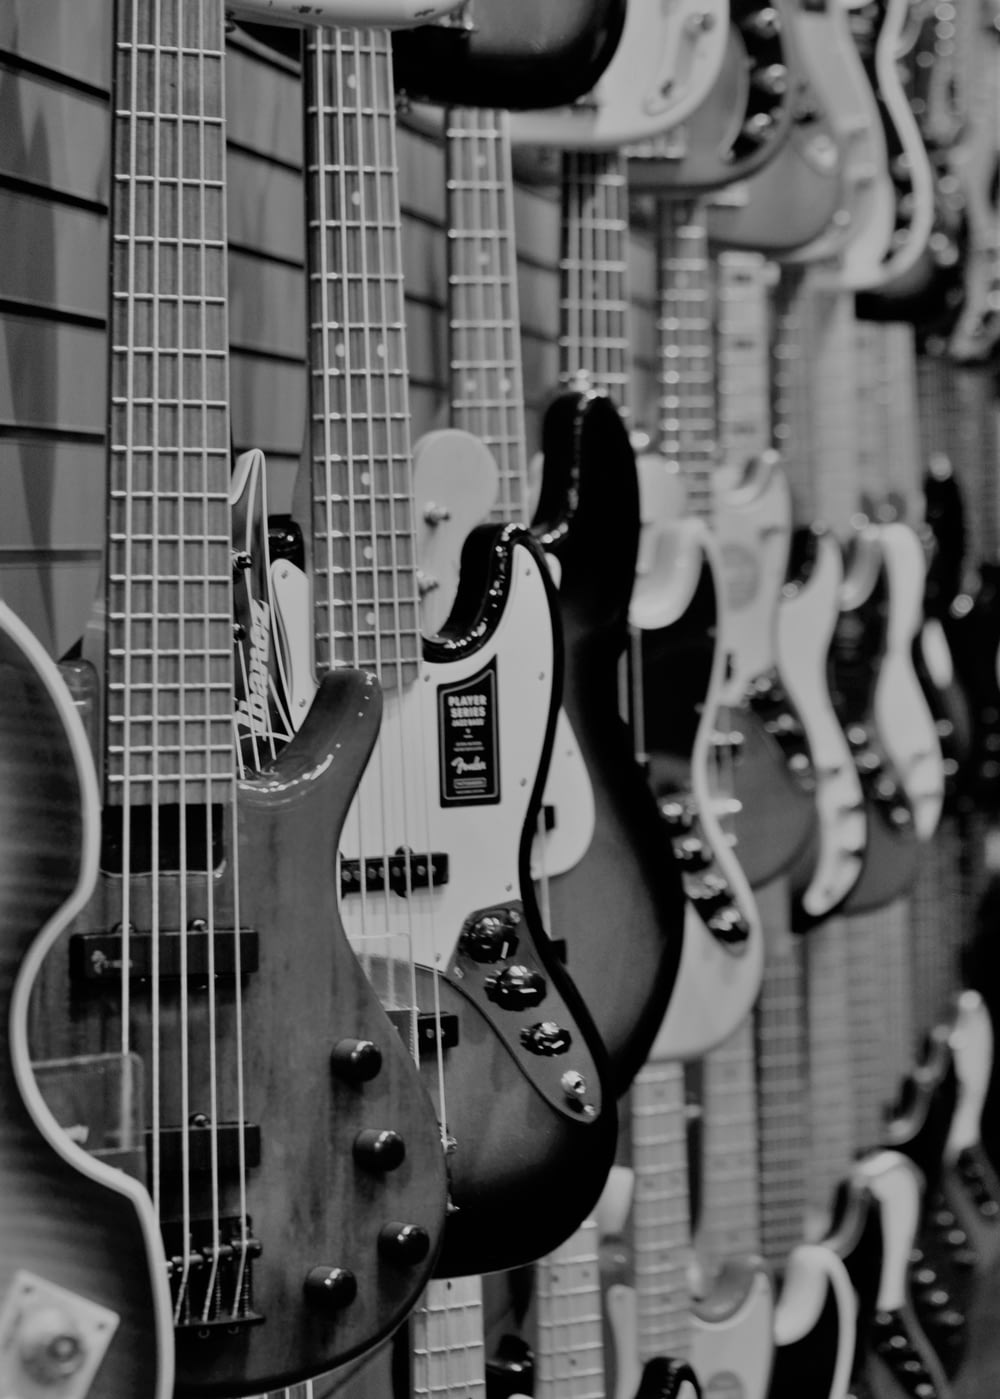 foto in scala di grigi di chitarre elettriche